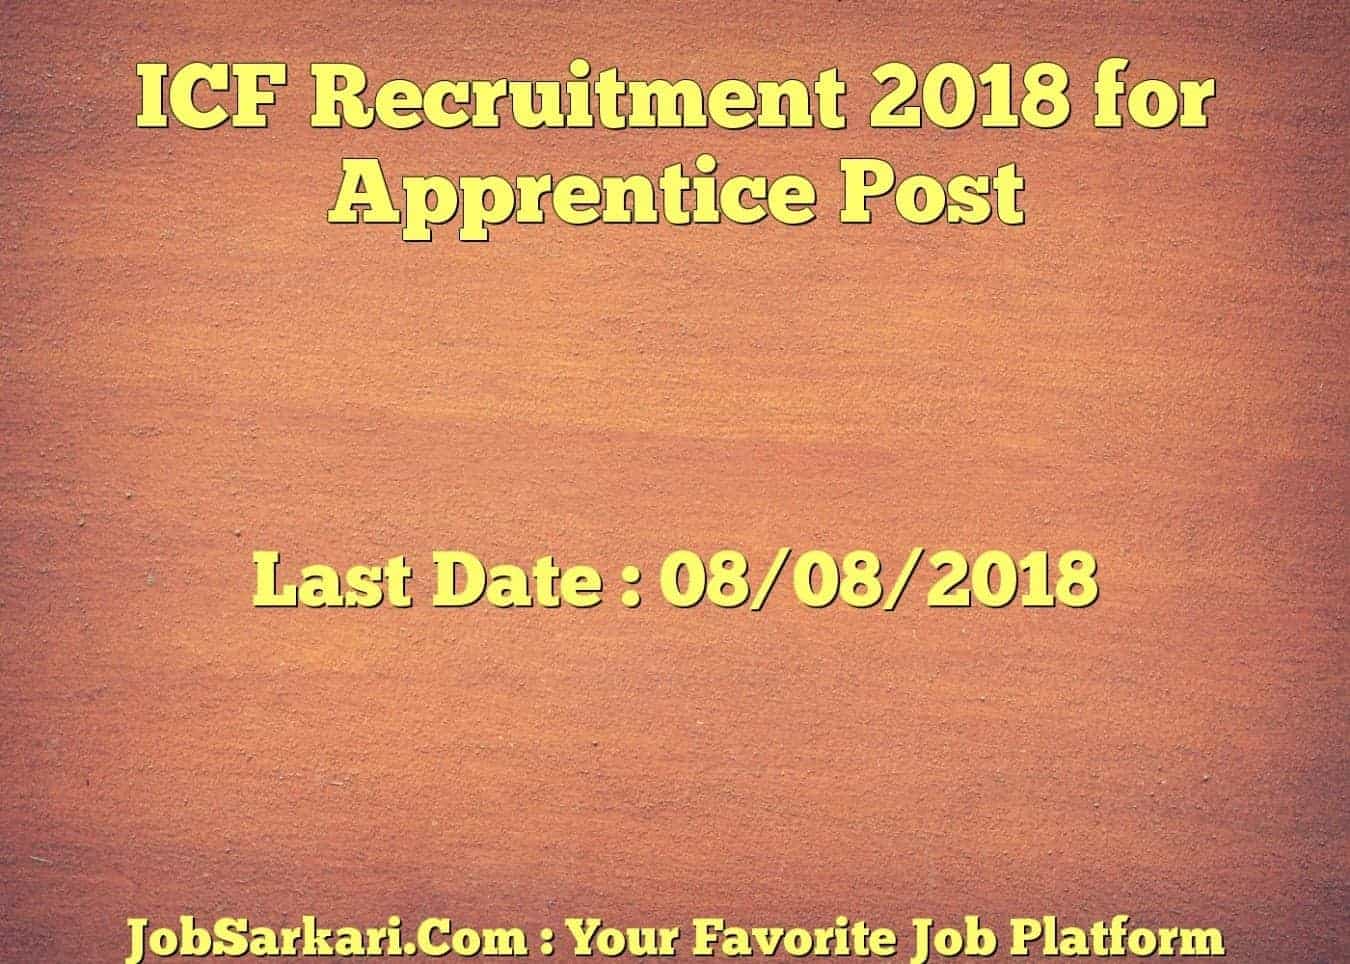 ICF Recruitment 2018 for Apprentice Post